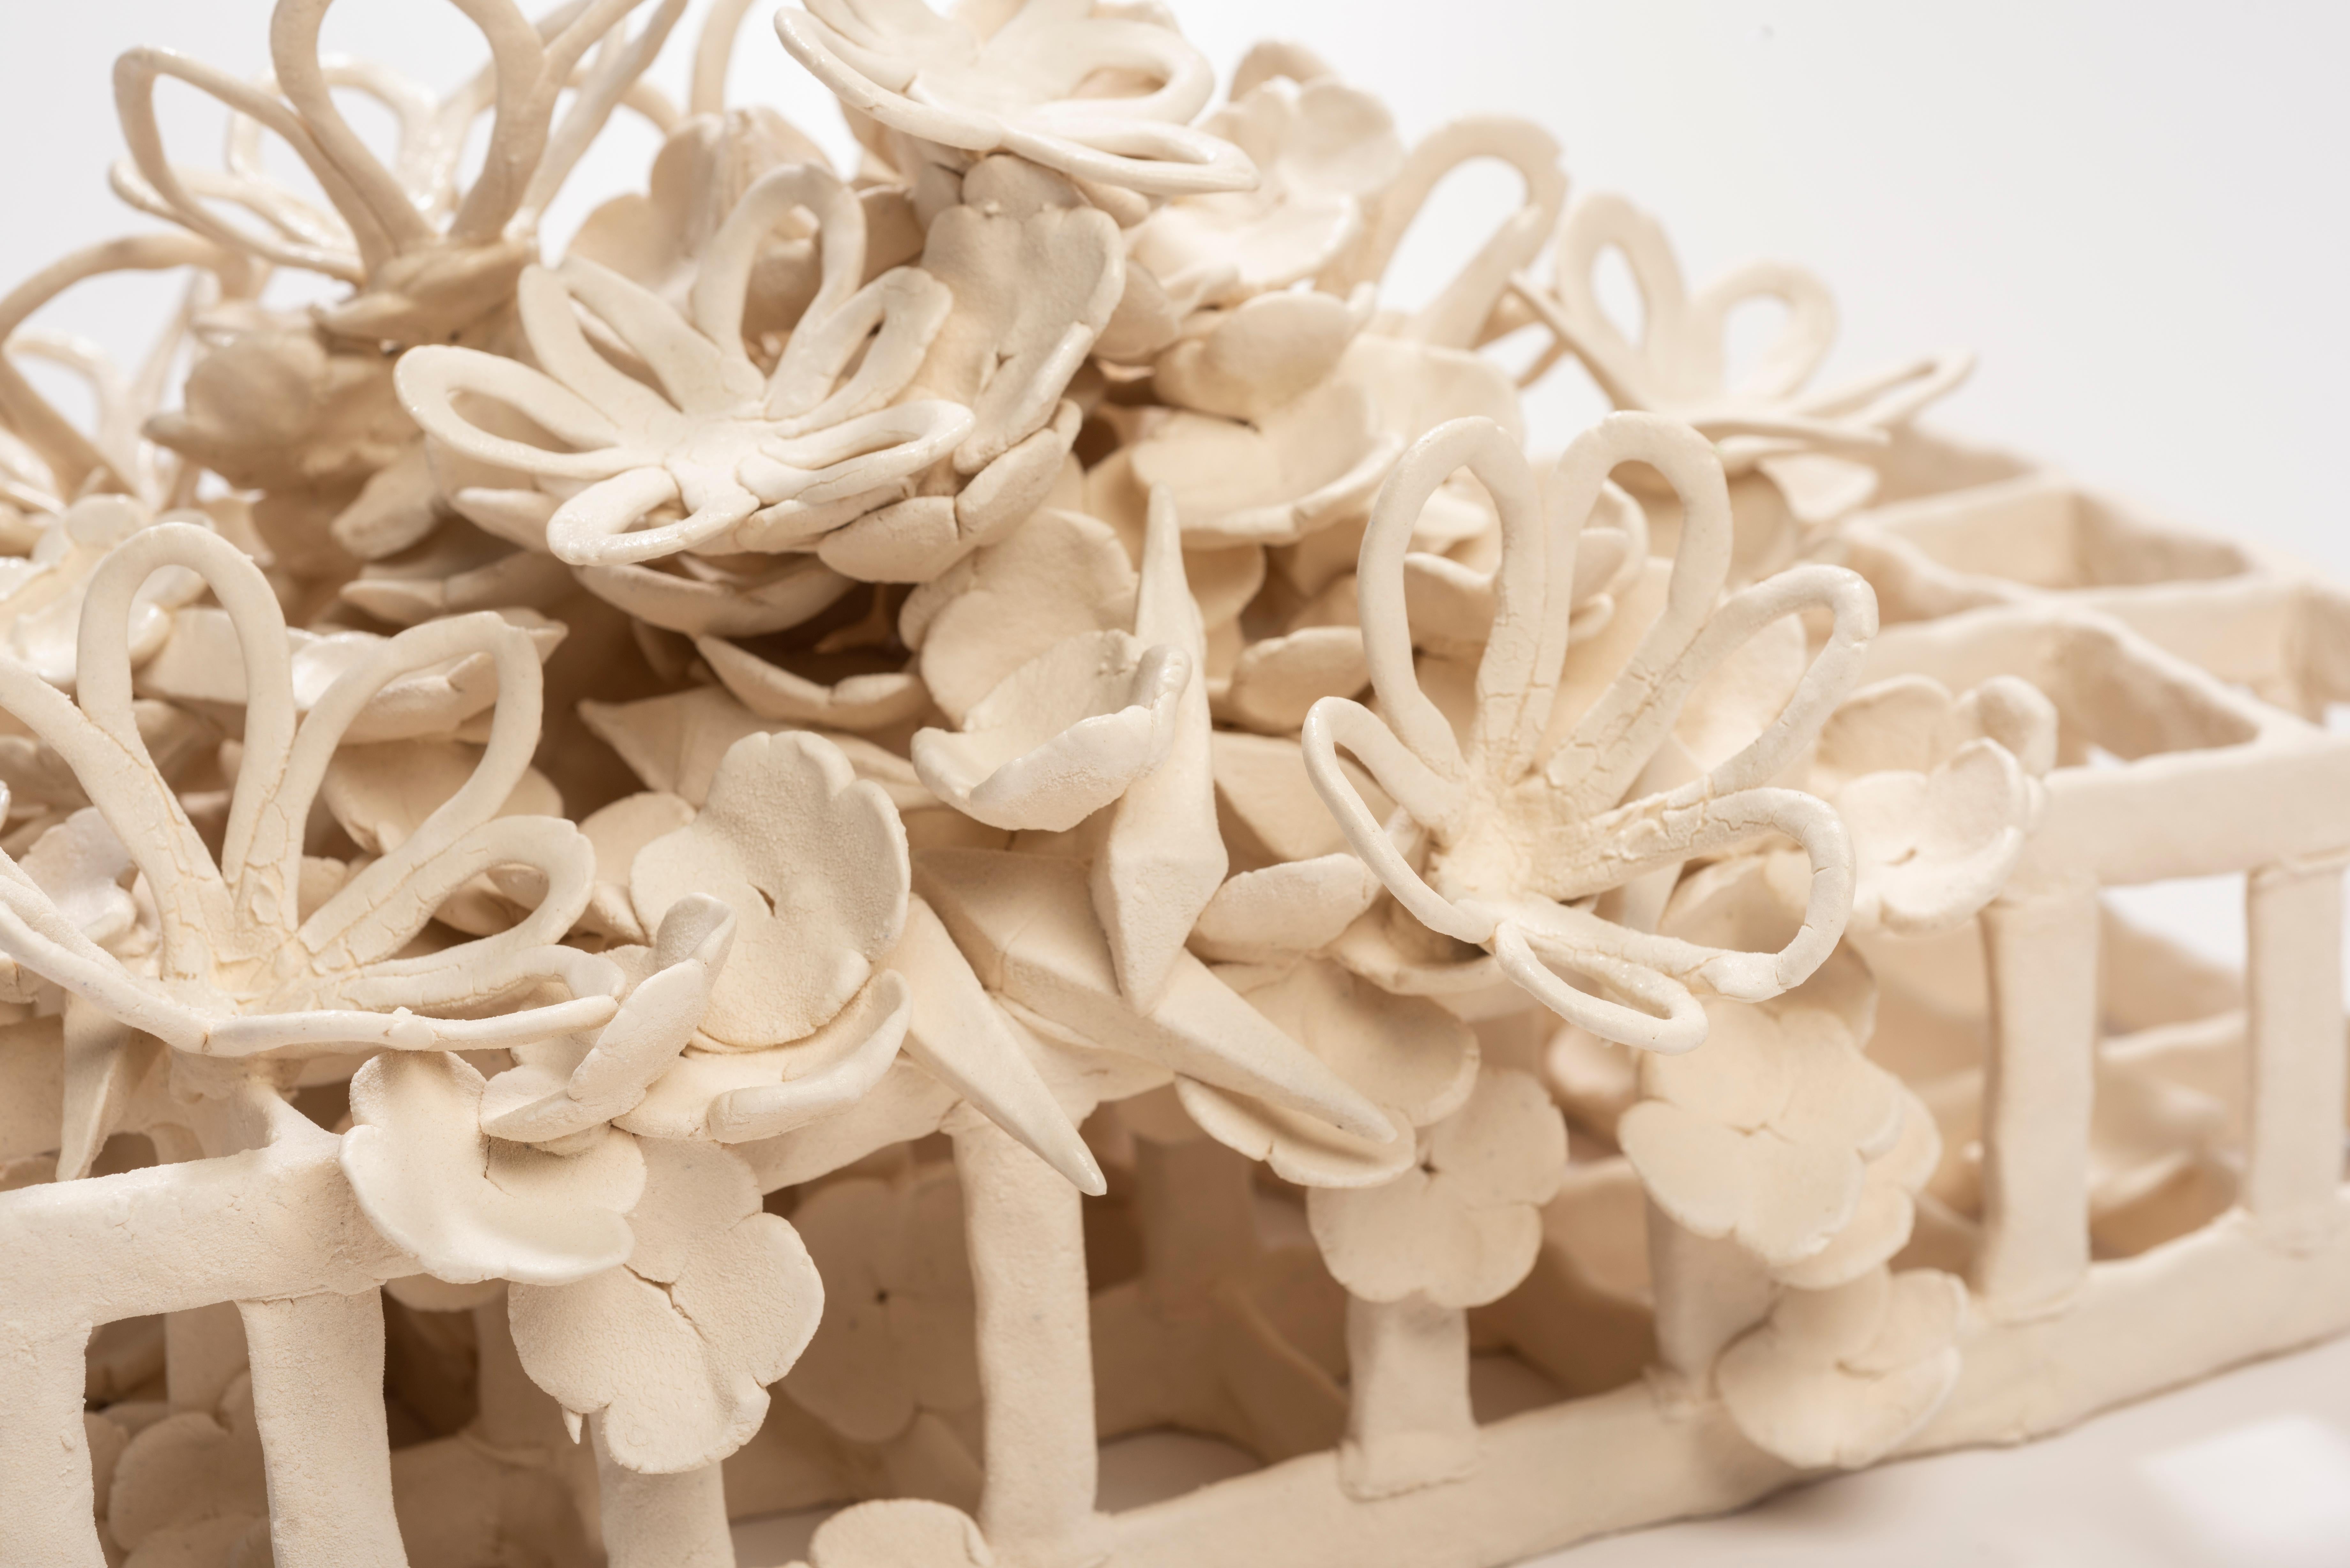 American Joanna Poag Binding Time (Grid w/ Quatrefoils & Flowers) Ceramic Sculpture, 2019 For Sale